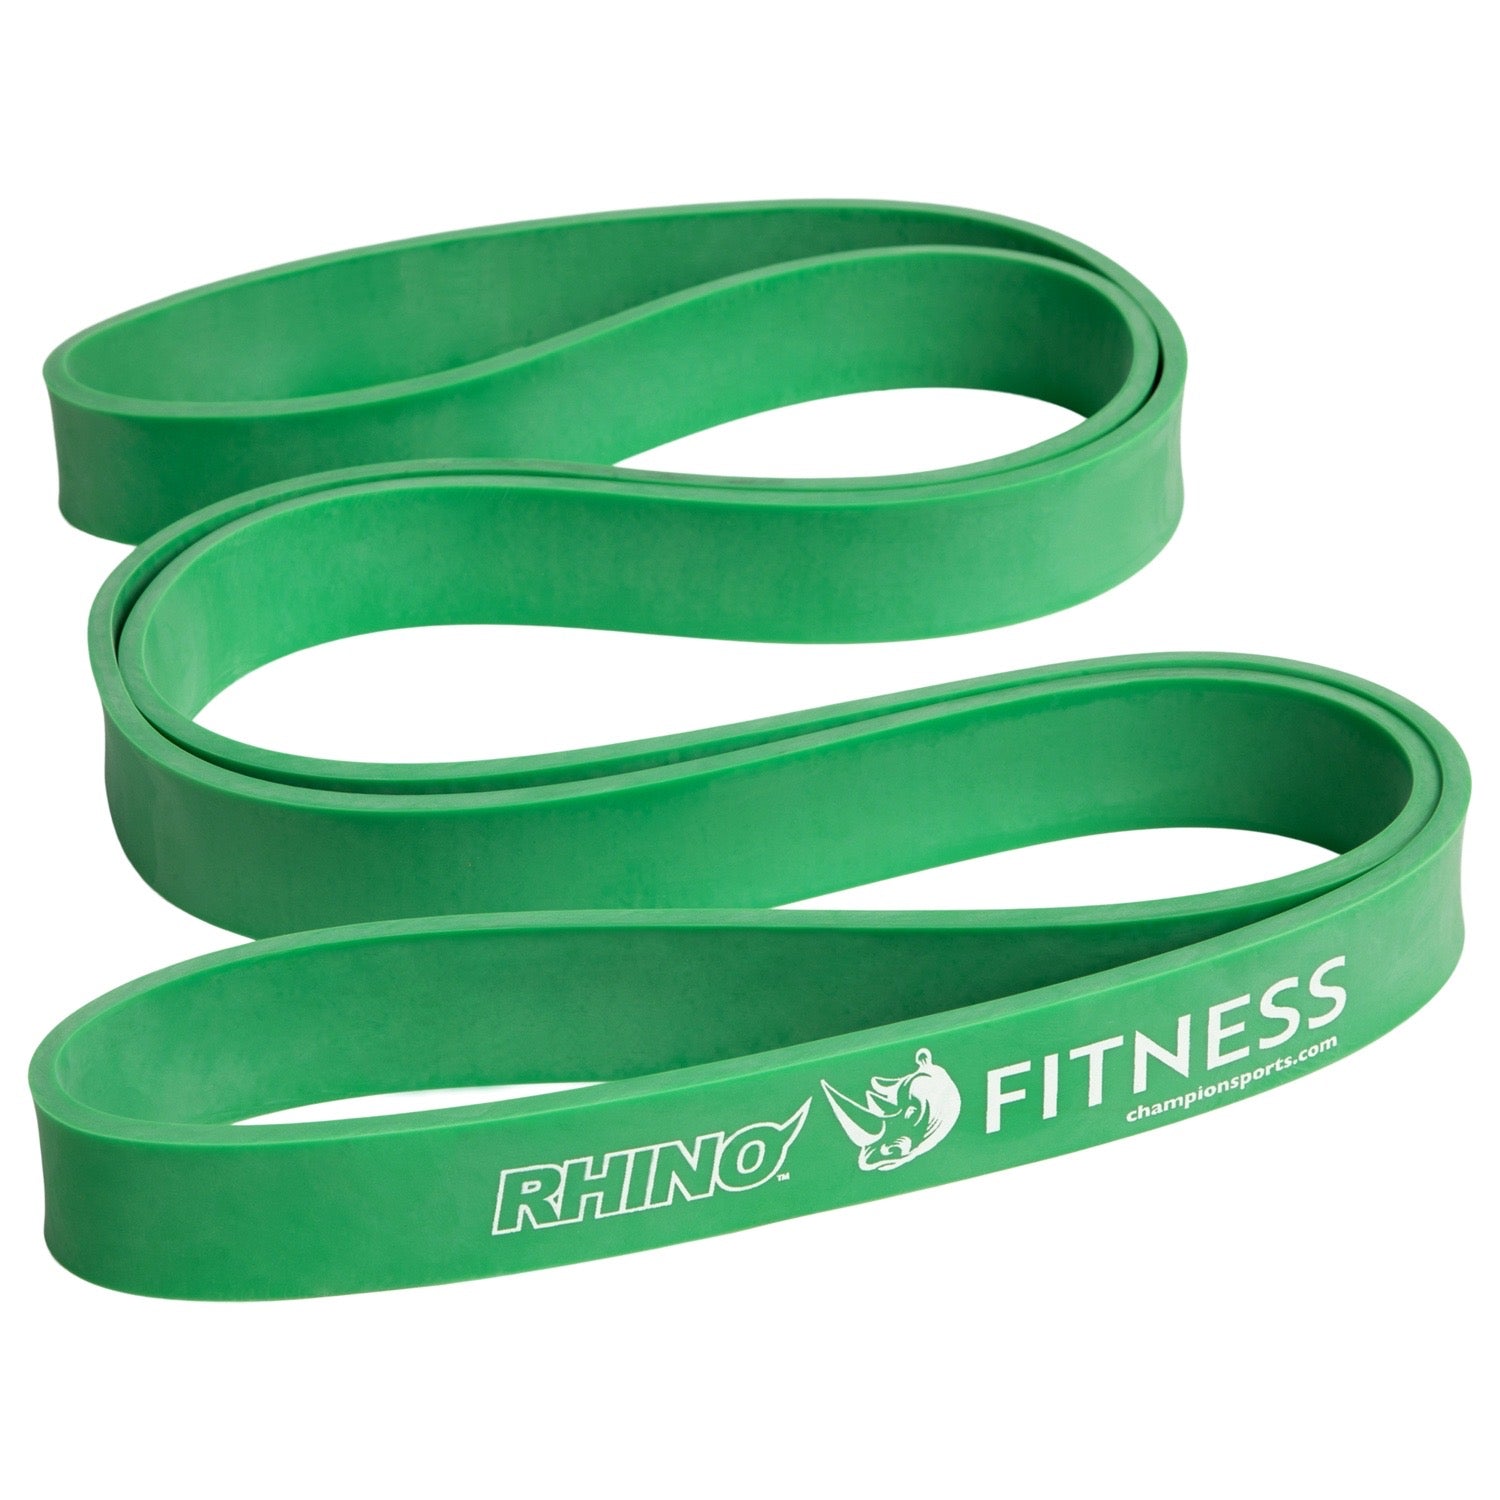 RHINO Fitness® Stretch Resistance-Training Band Series Medium, 10-45 lbs, Green RHINO Fitness fitness